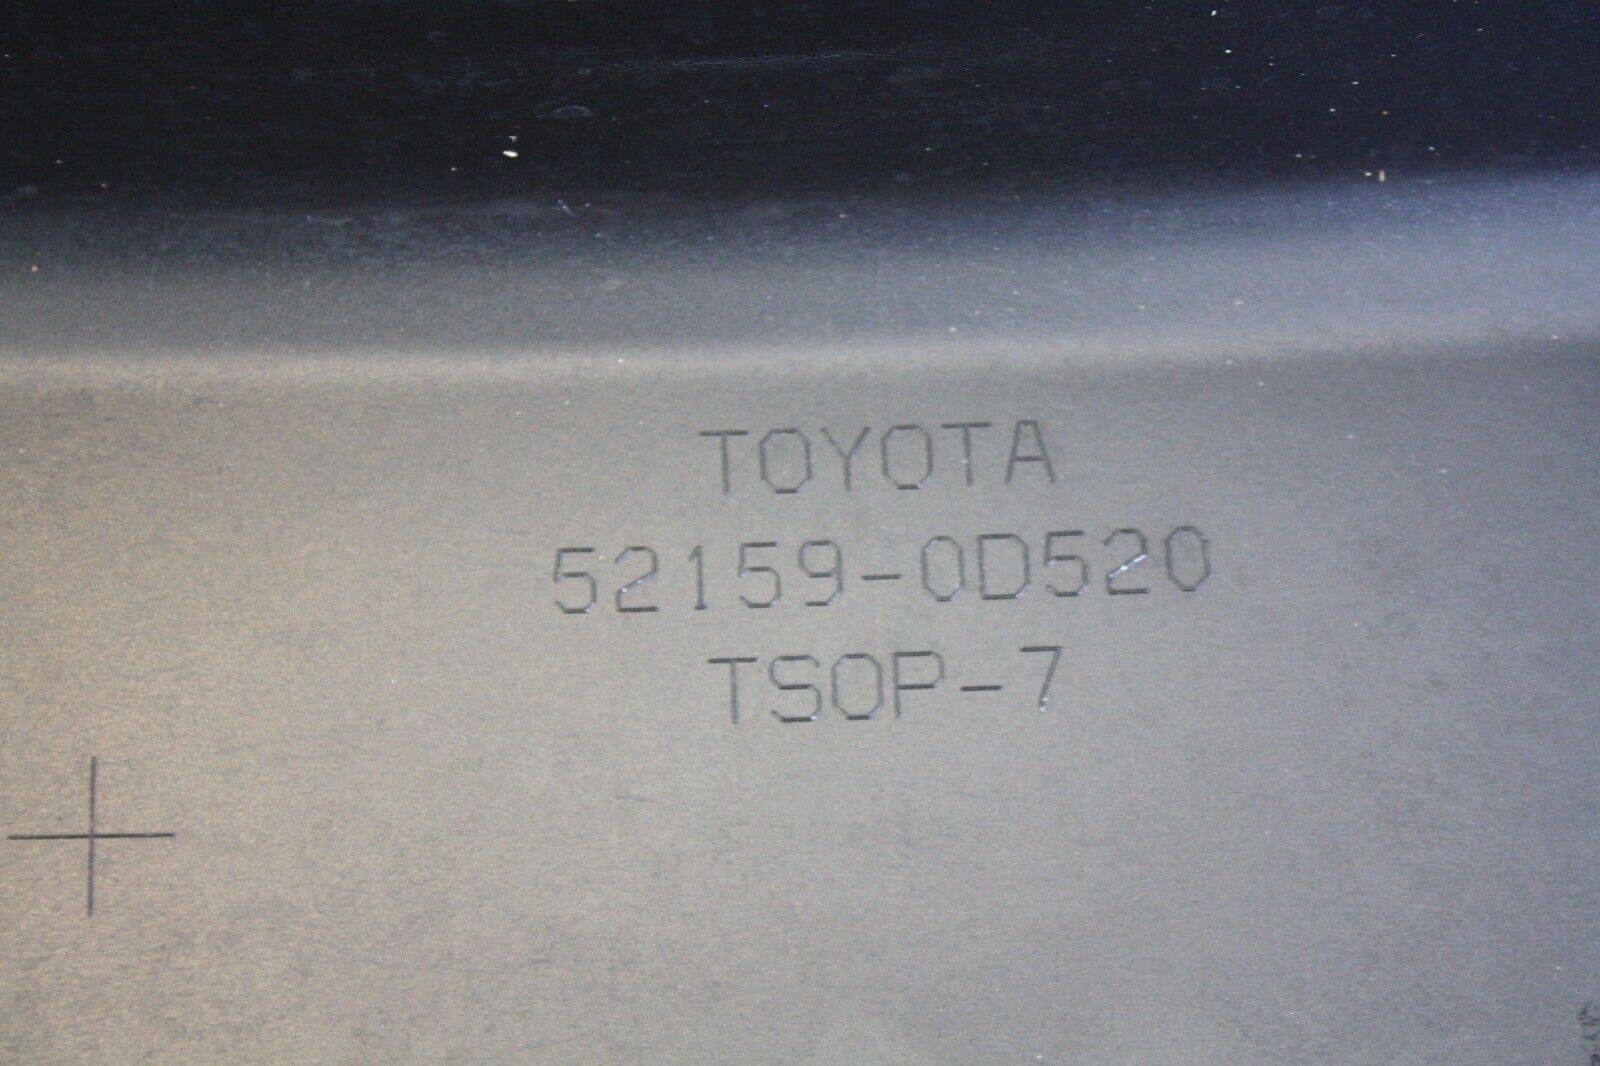 Toyota-Yaris-Rear-Bumper-2014-To-2017-52159-0D520-Genuine-176052532078-11